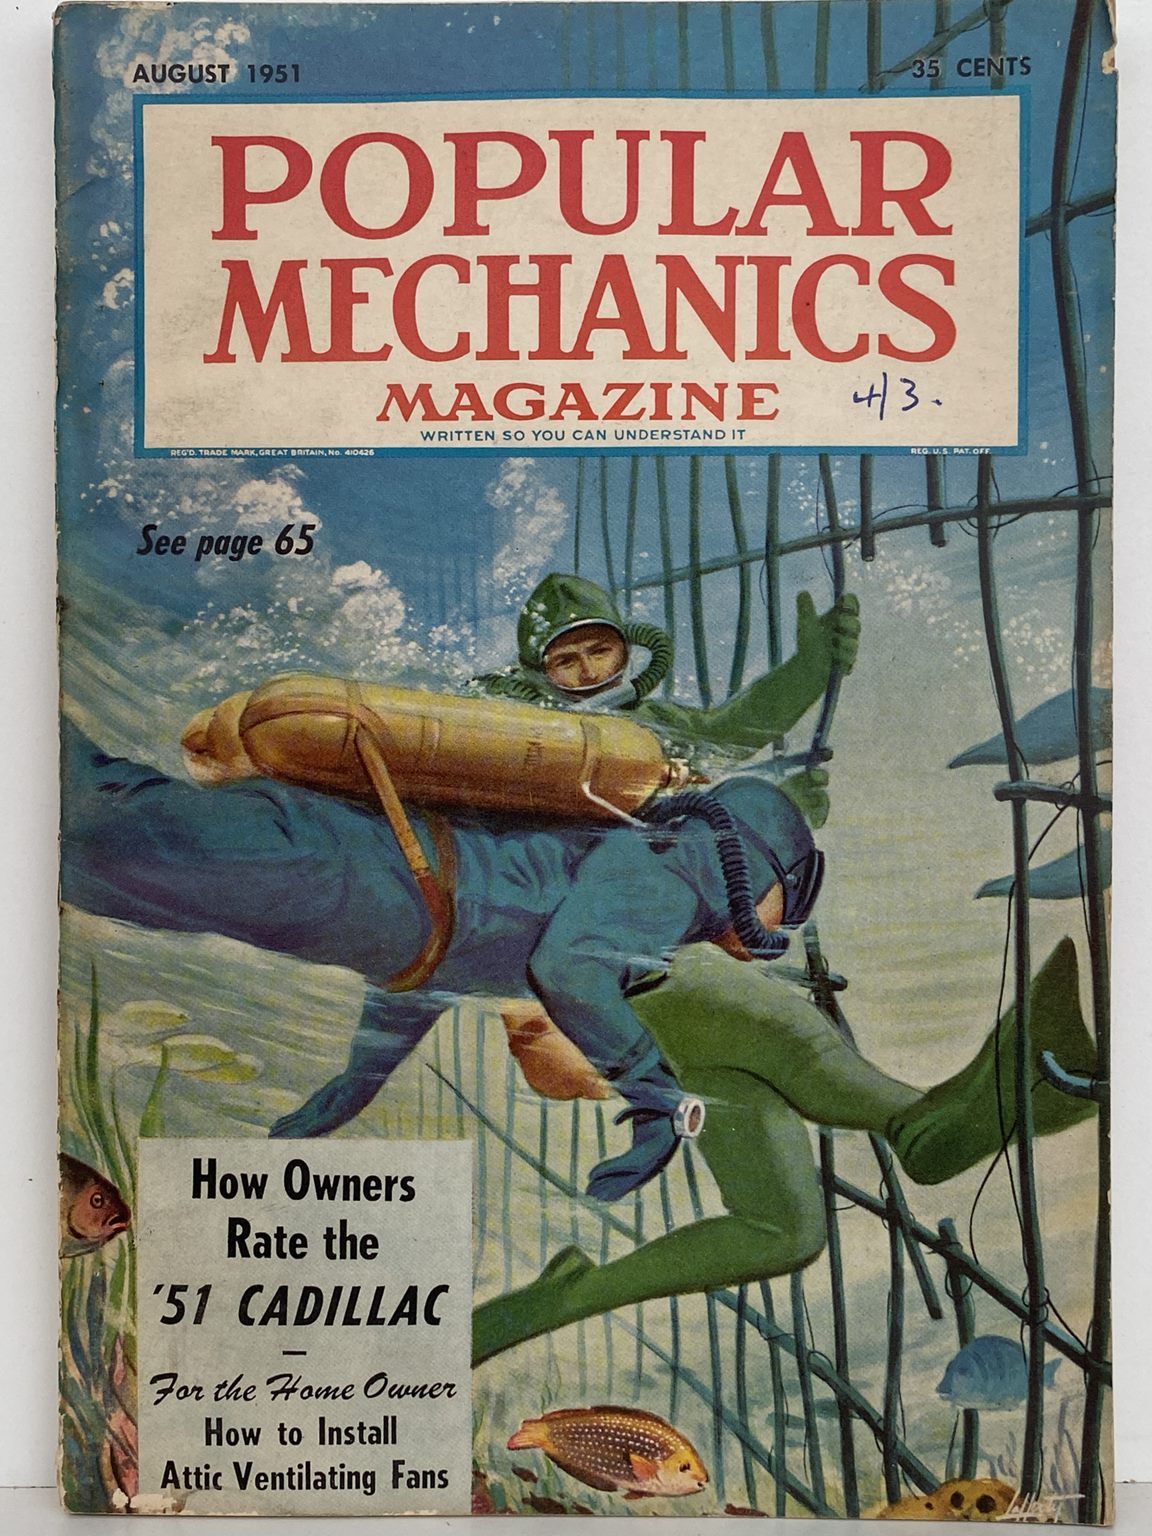 VINTAGE MAGAZINE: Popular Mechanics - Vol. 96, No. 2 - August 1951